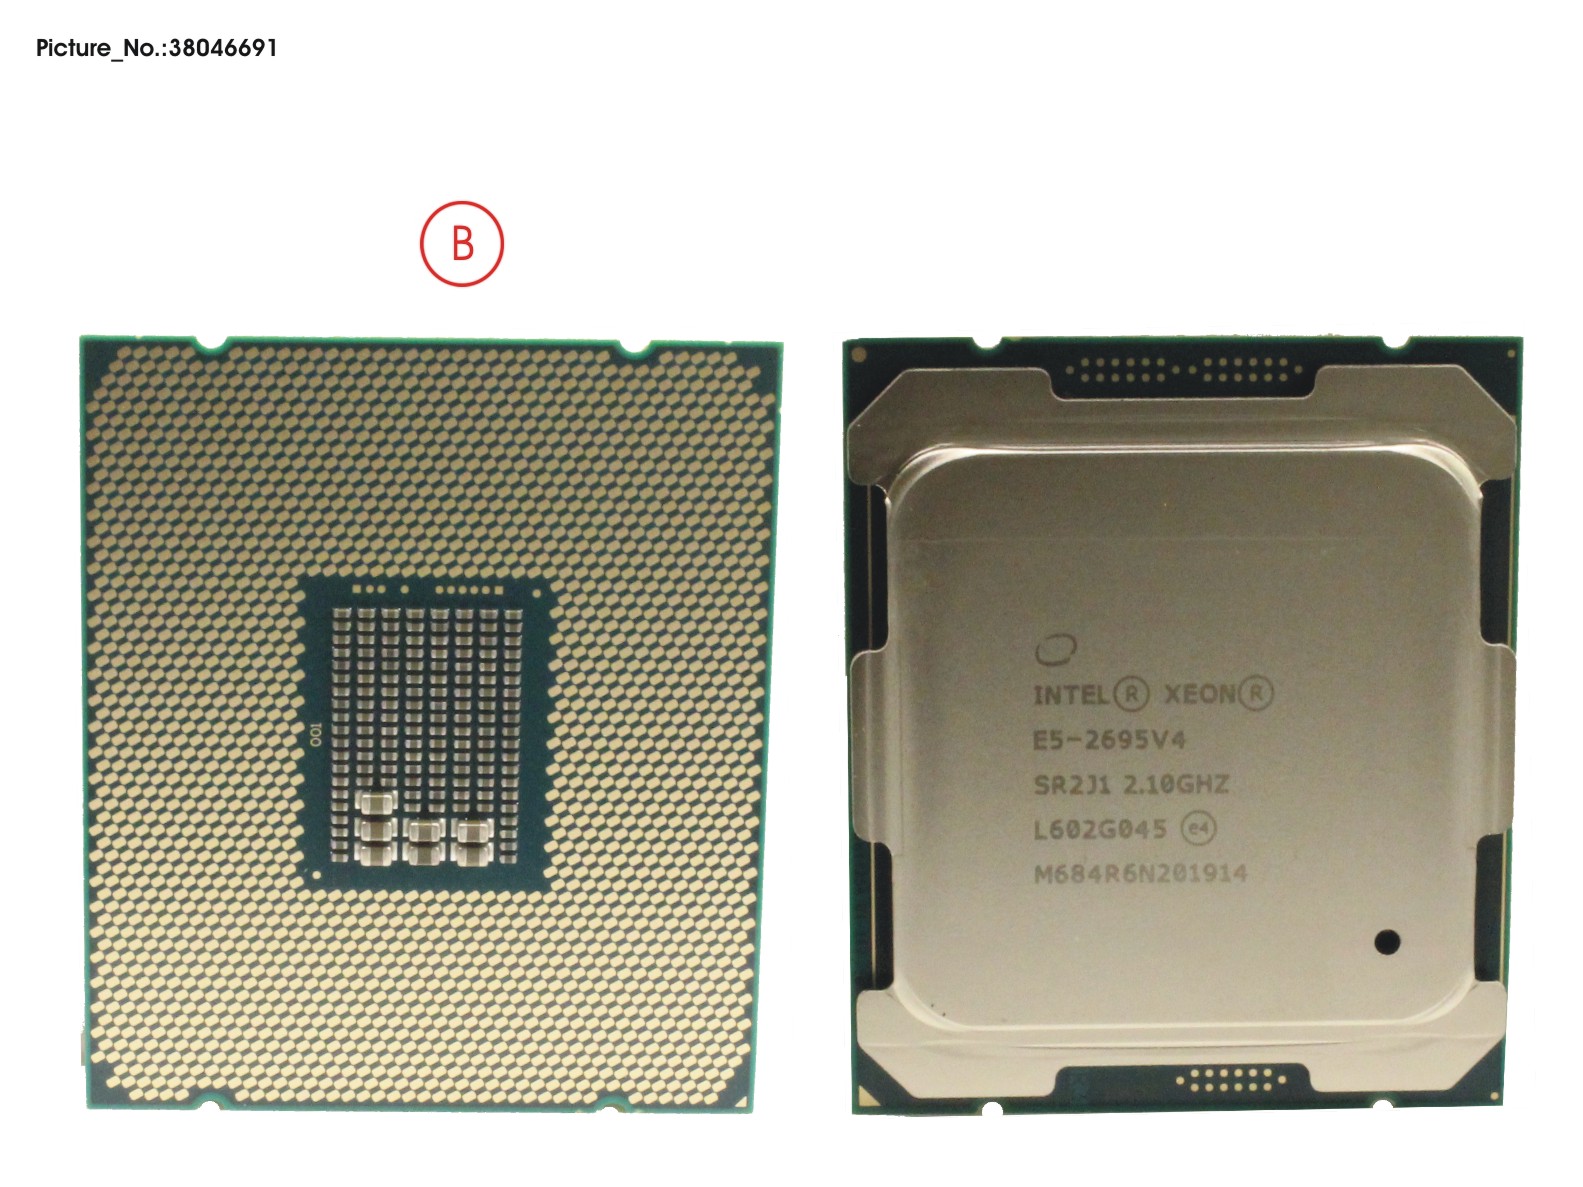 CPU XEON E5-2695V4 2,1GHZ 120W